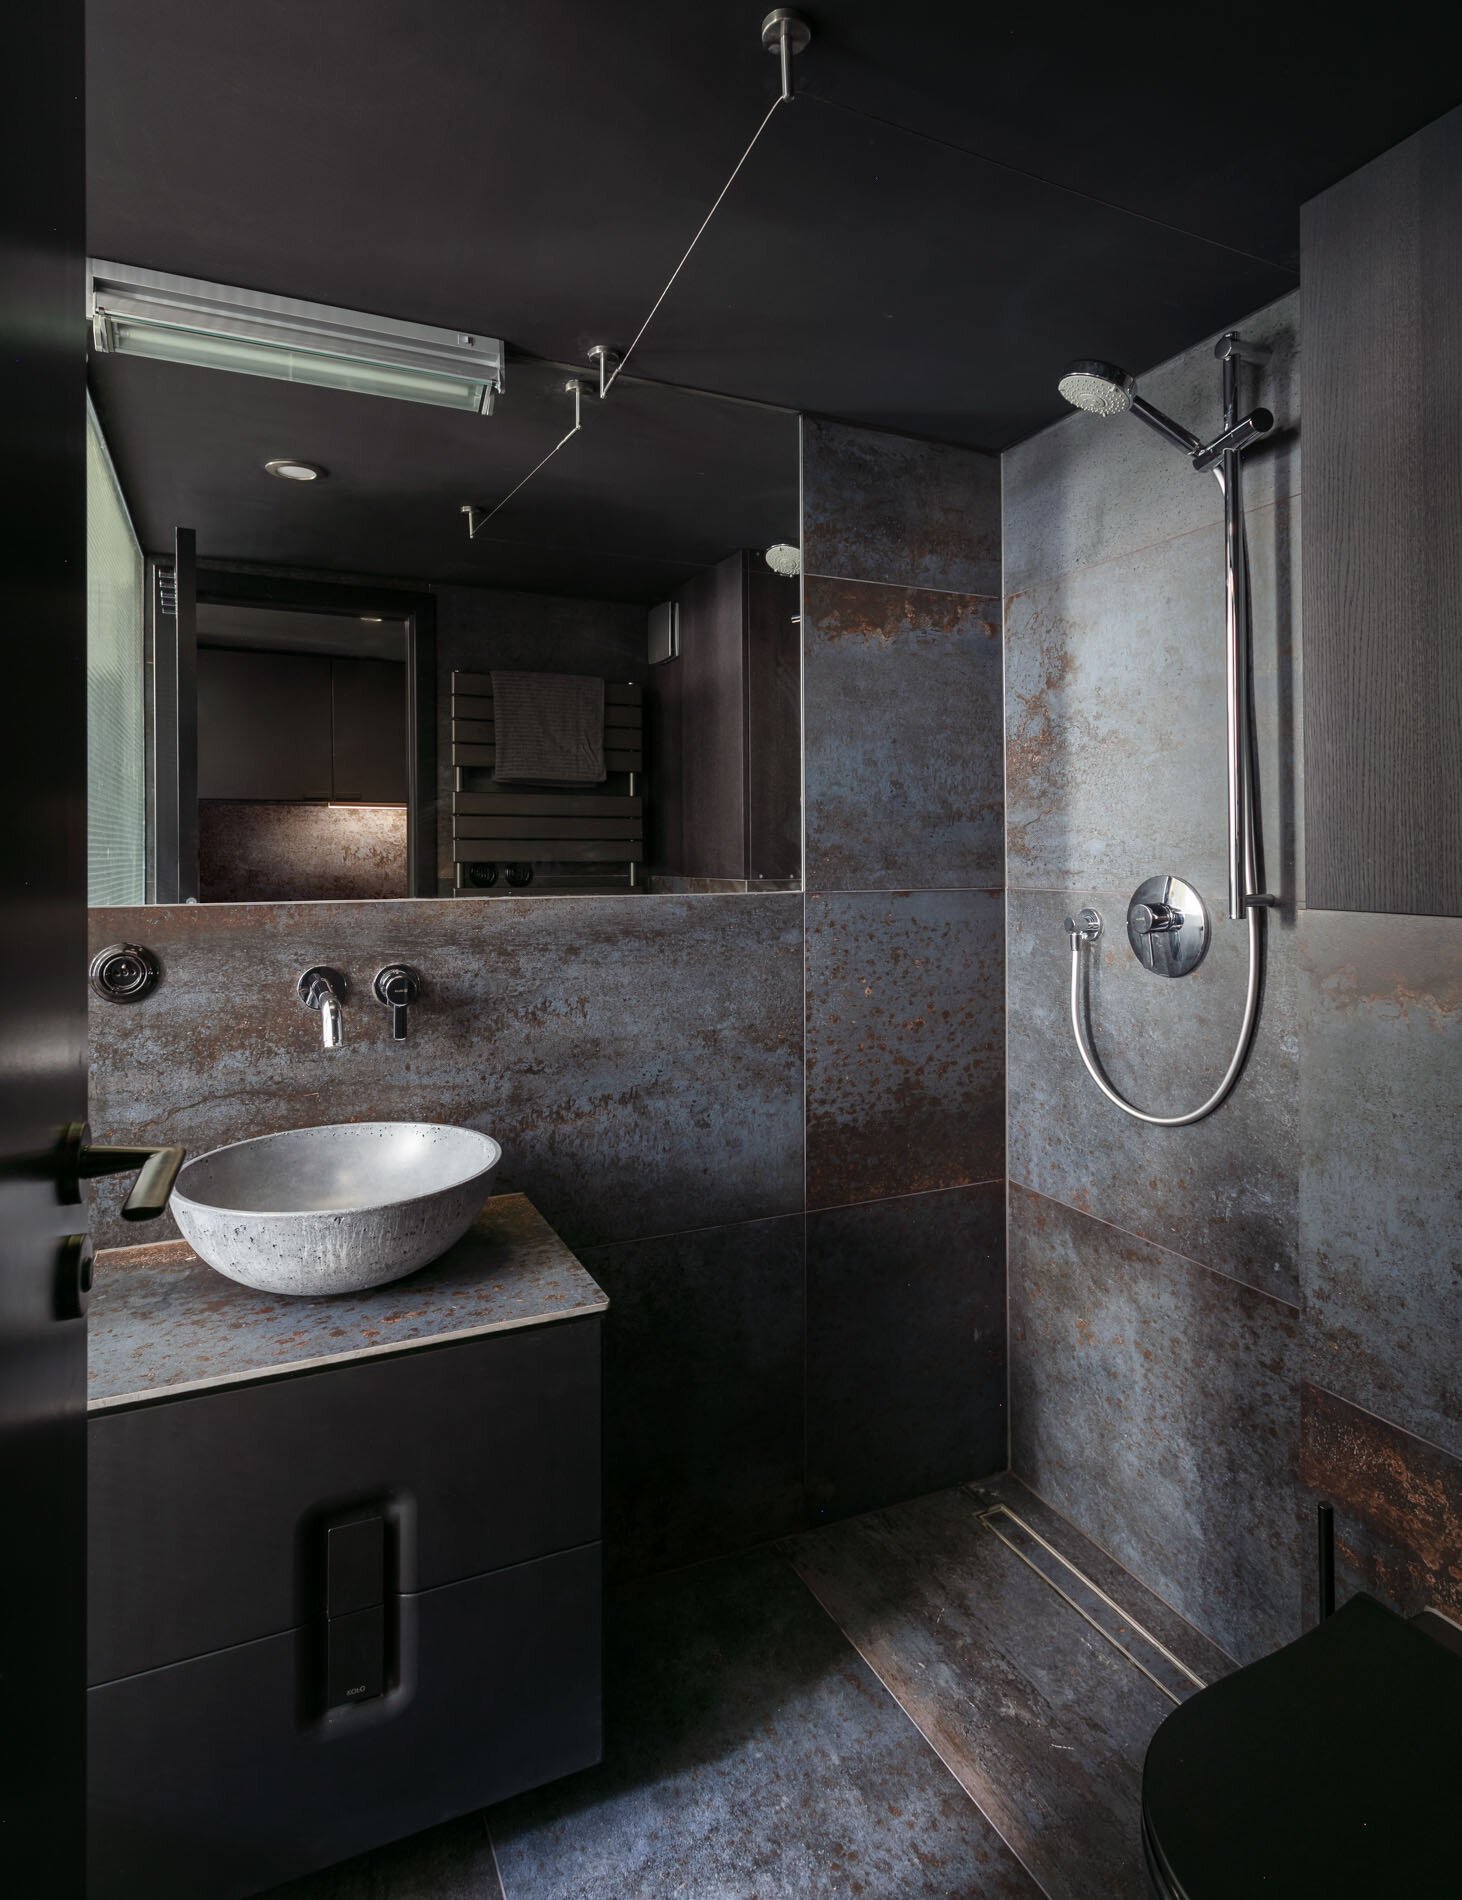 interior photography of apartman bathroom by heidler architect- jirilizler architecture photographer.JPG